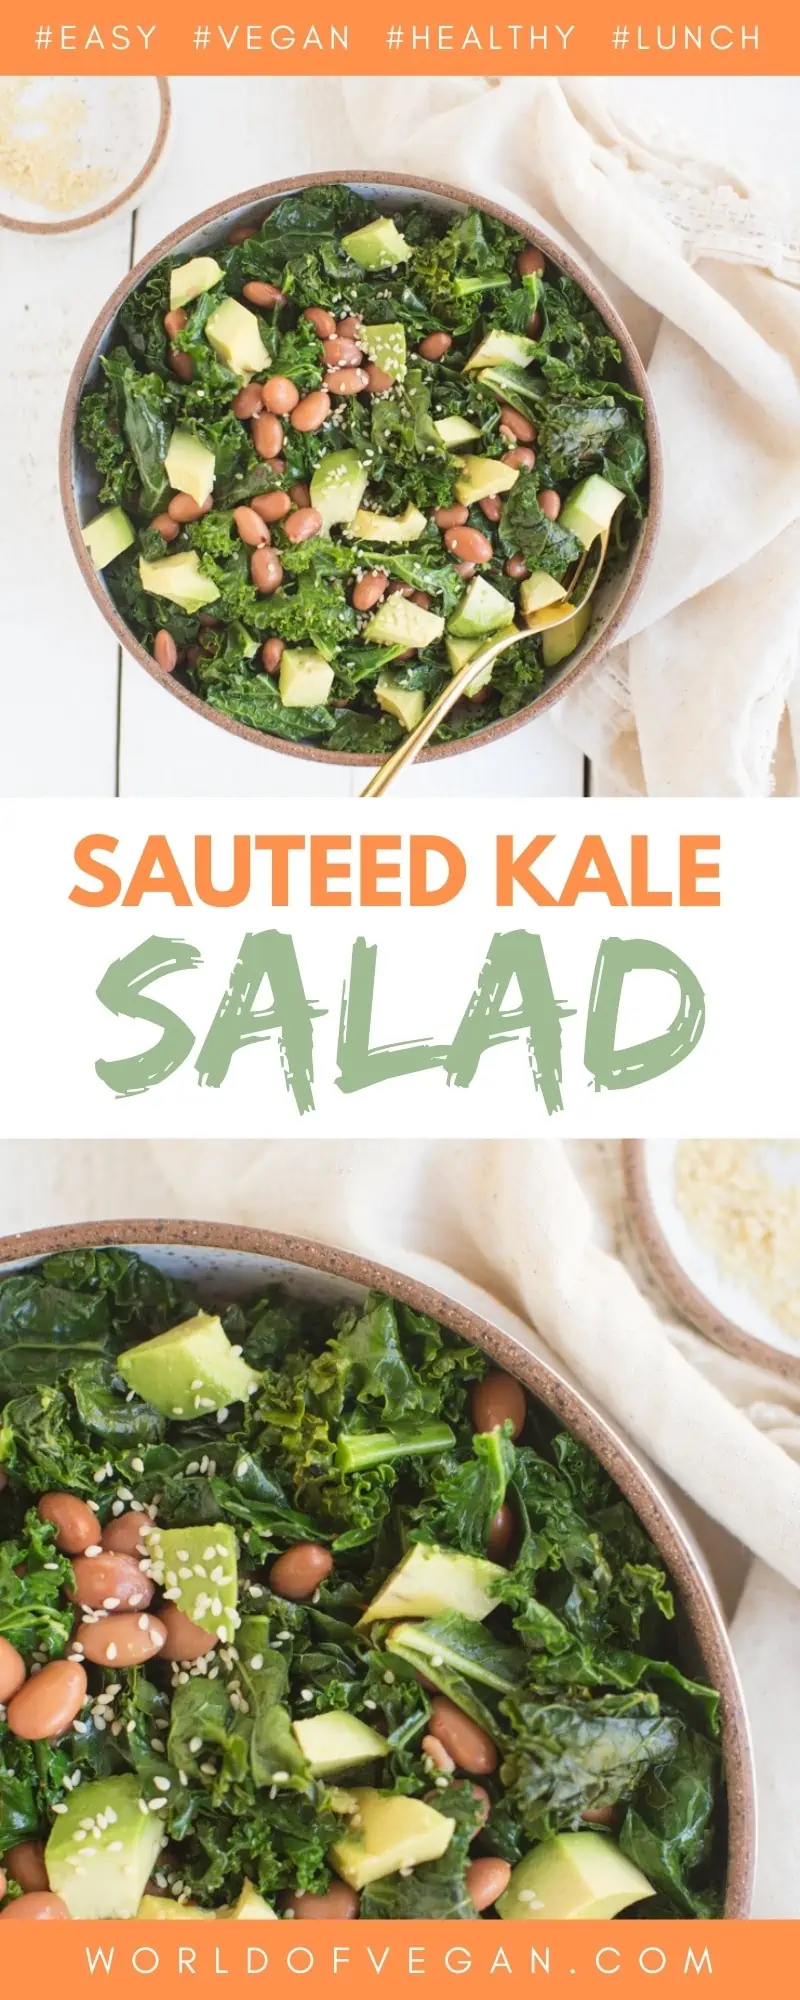 Sauteed Kale and Avocado Salad